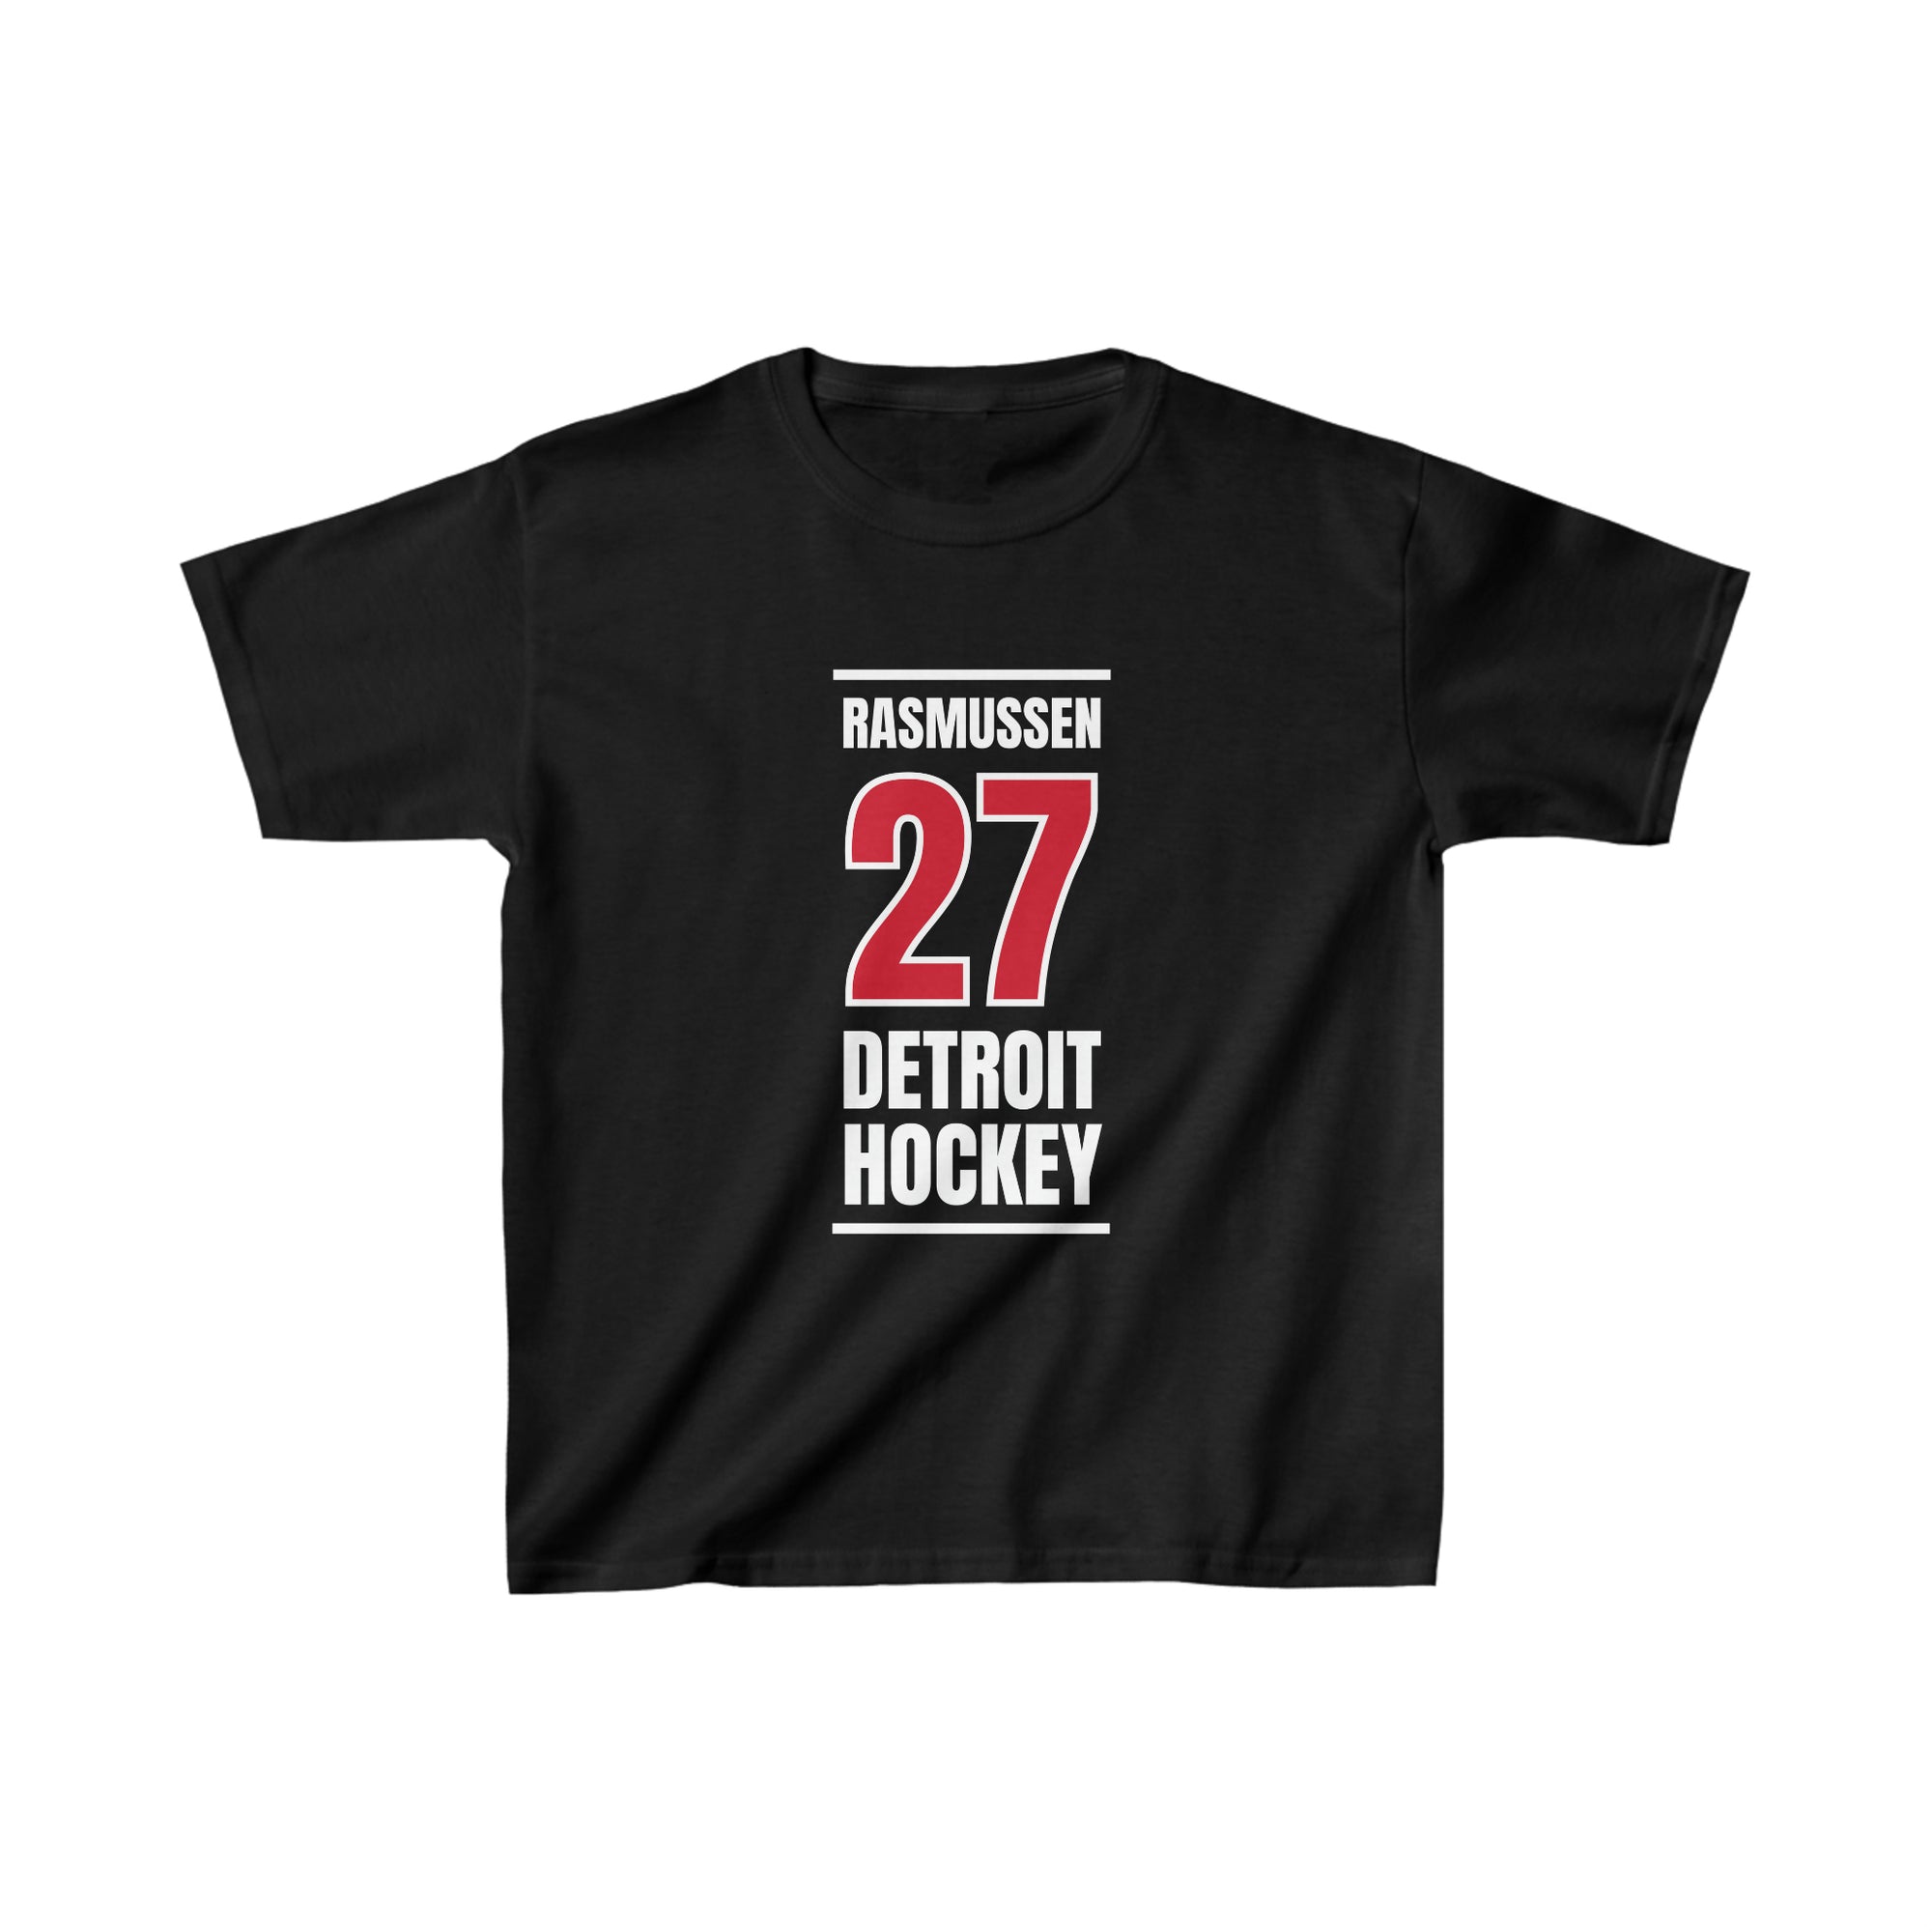 Rasmussen 27 Detroit Hockey Red Vertical Design Kids Tee